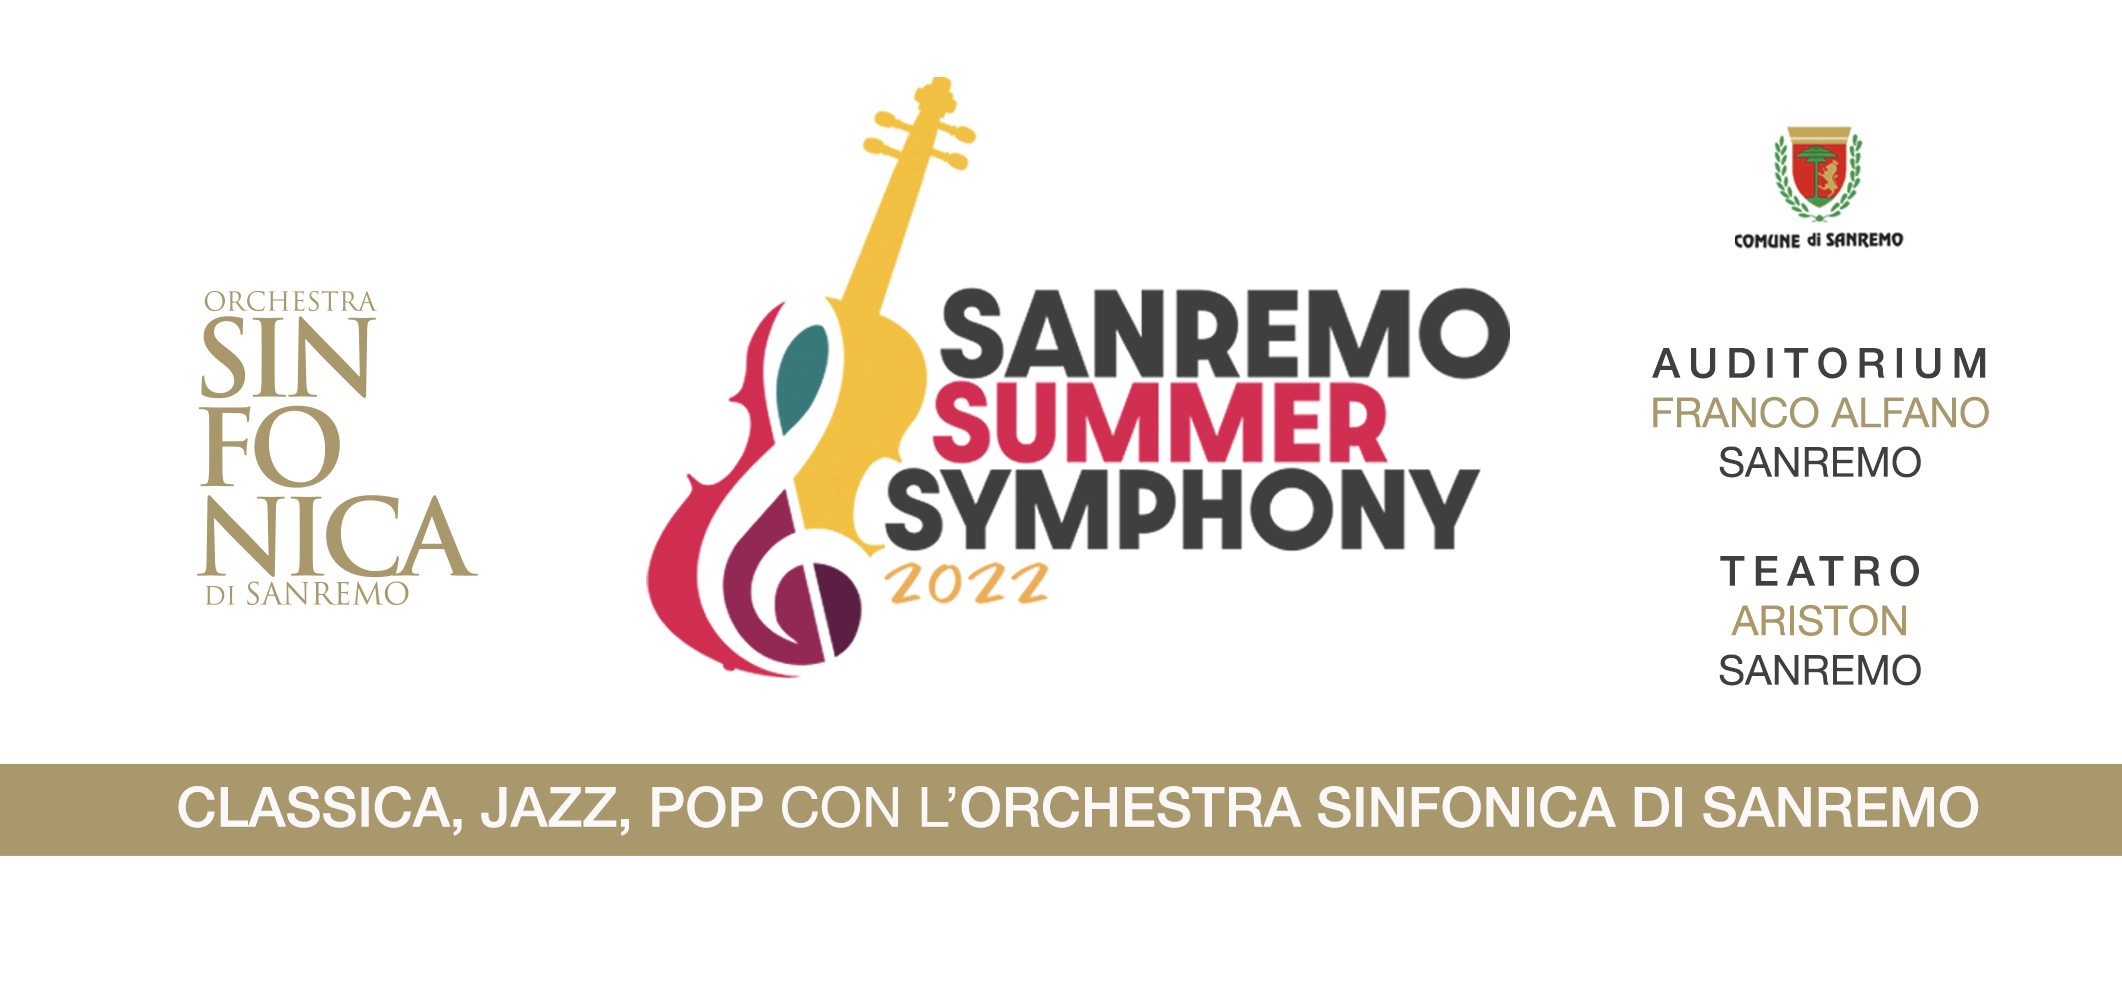 Sanremo Summer Symphony 2022